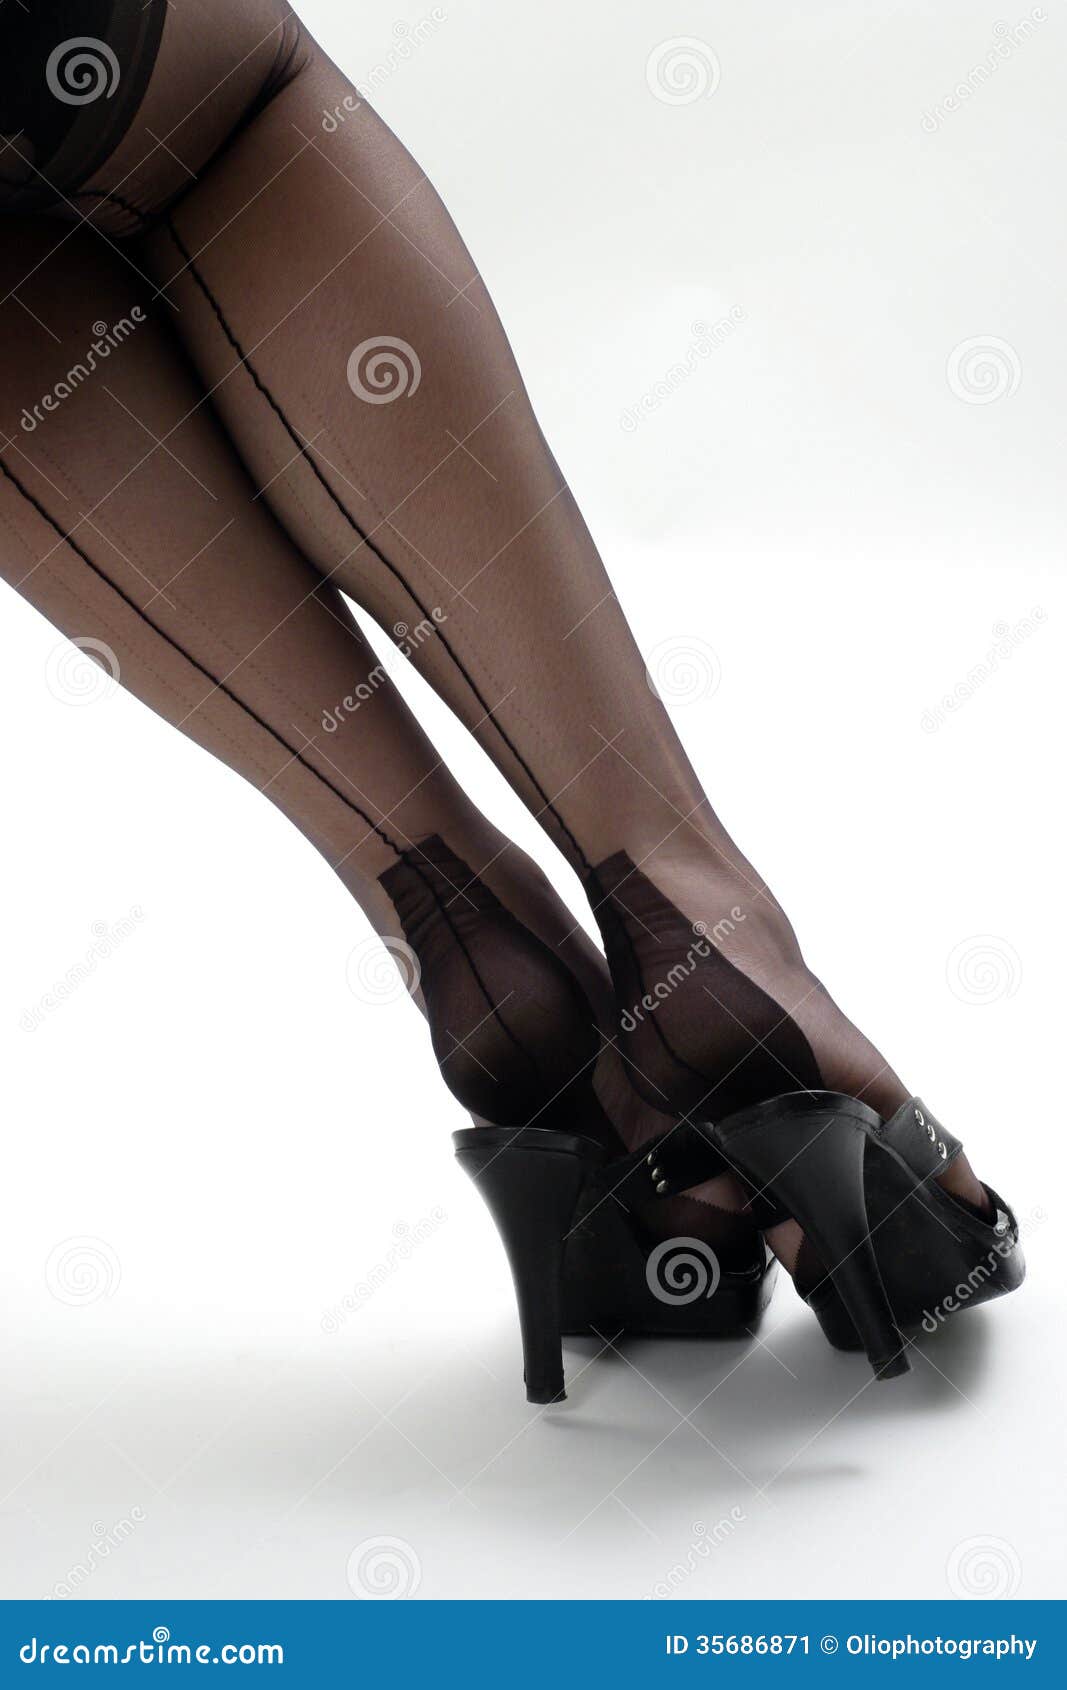 Stocking Legs Stock Image Image Of Black Pantyhose 35686871